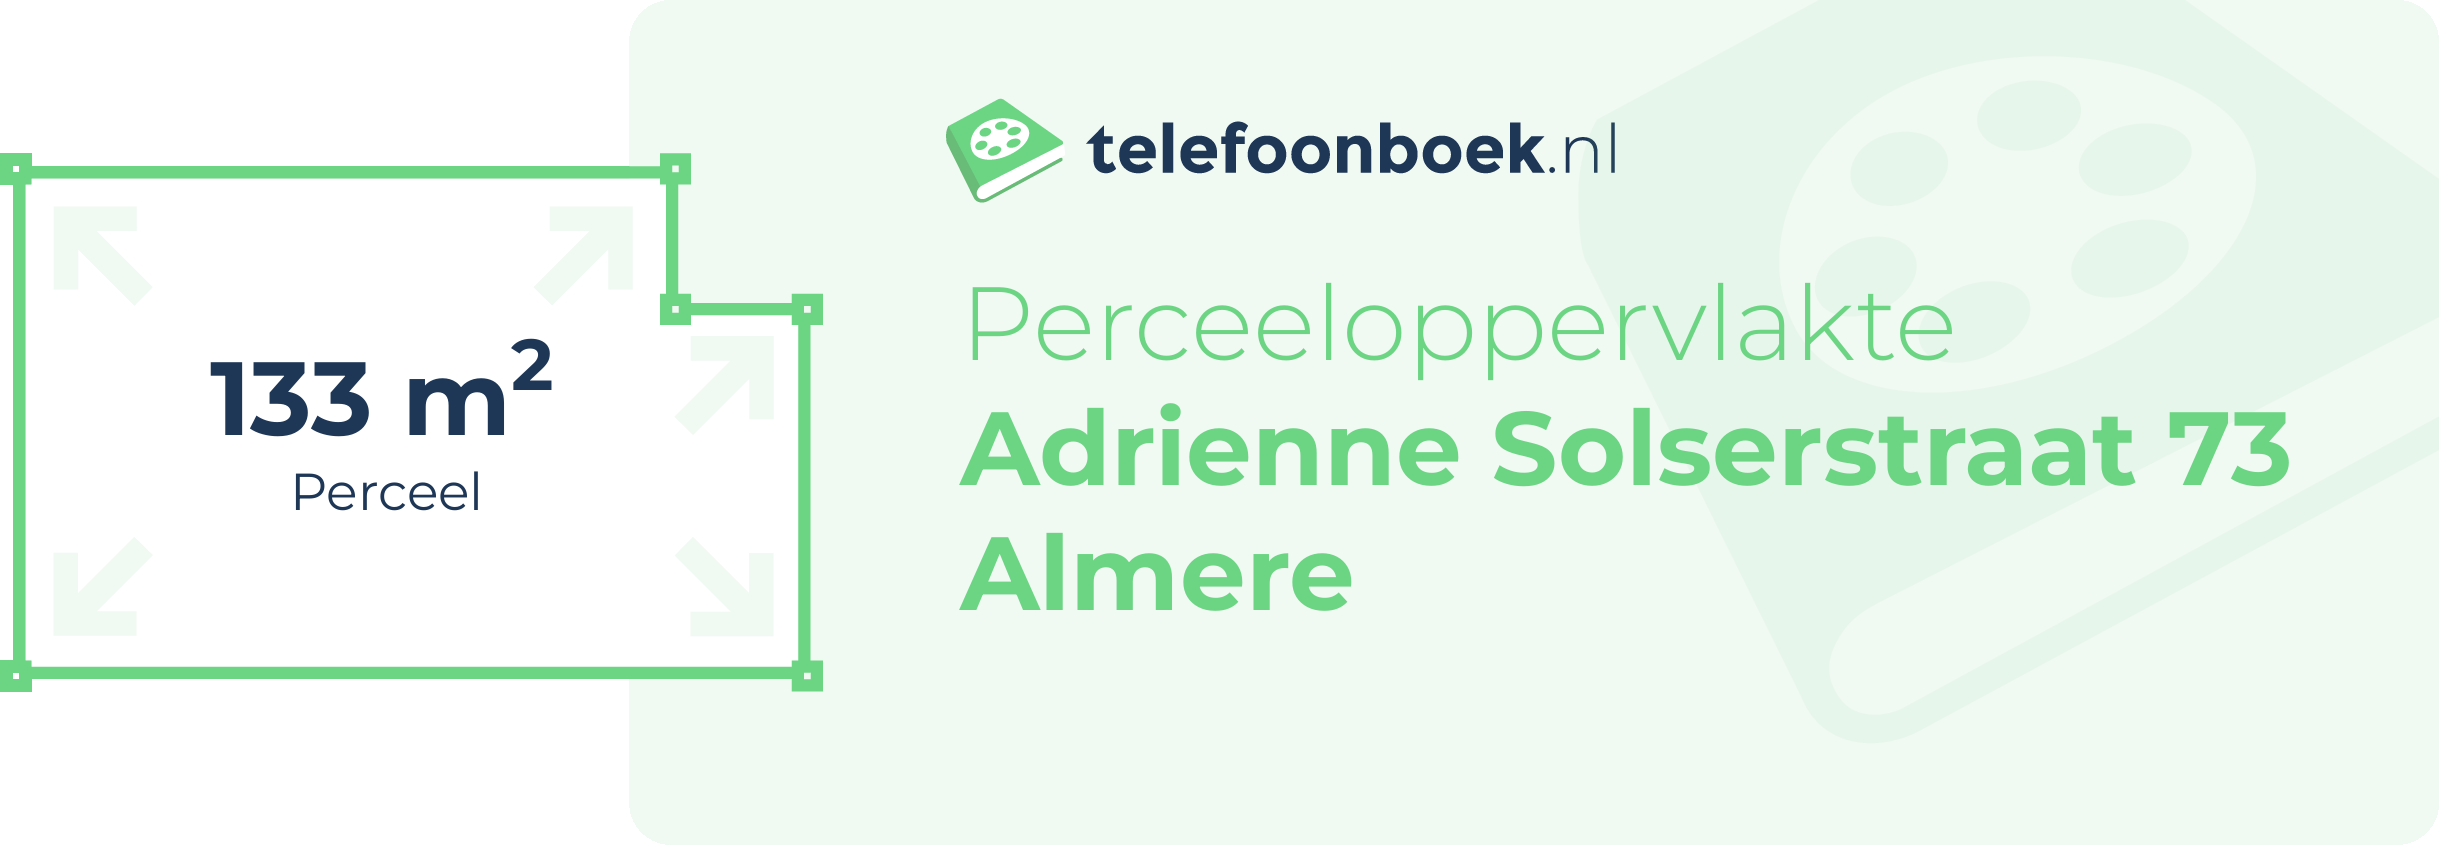 Perceeloppervlakte Adrienne Solserstraat 73 Almere